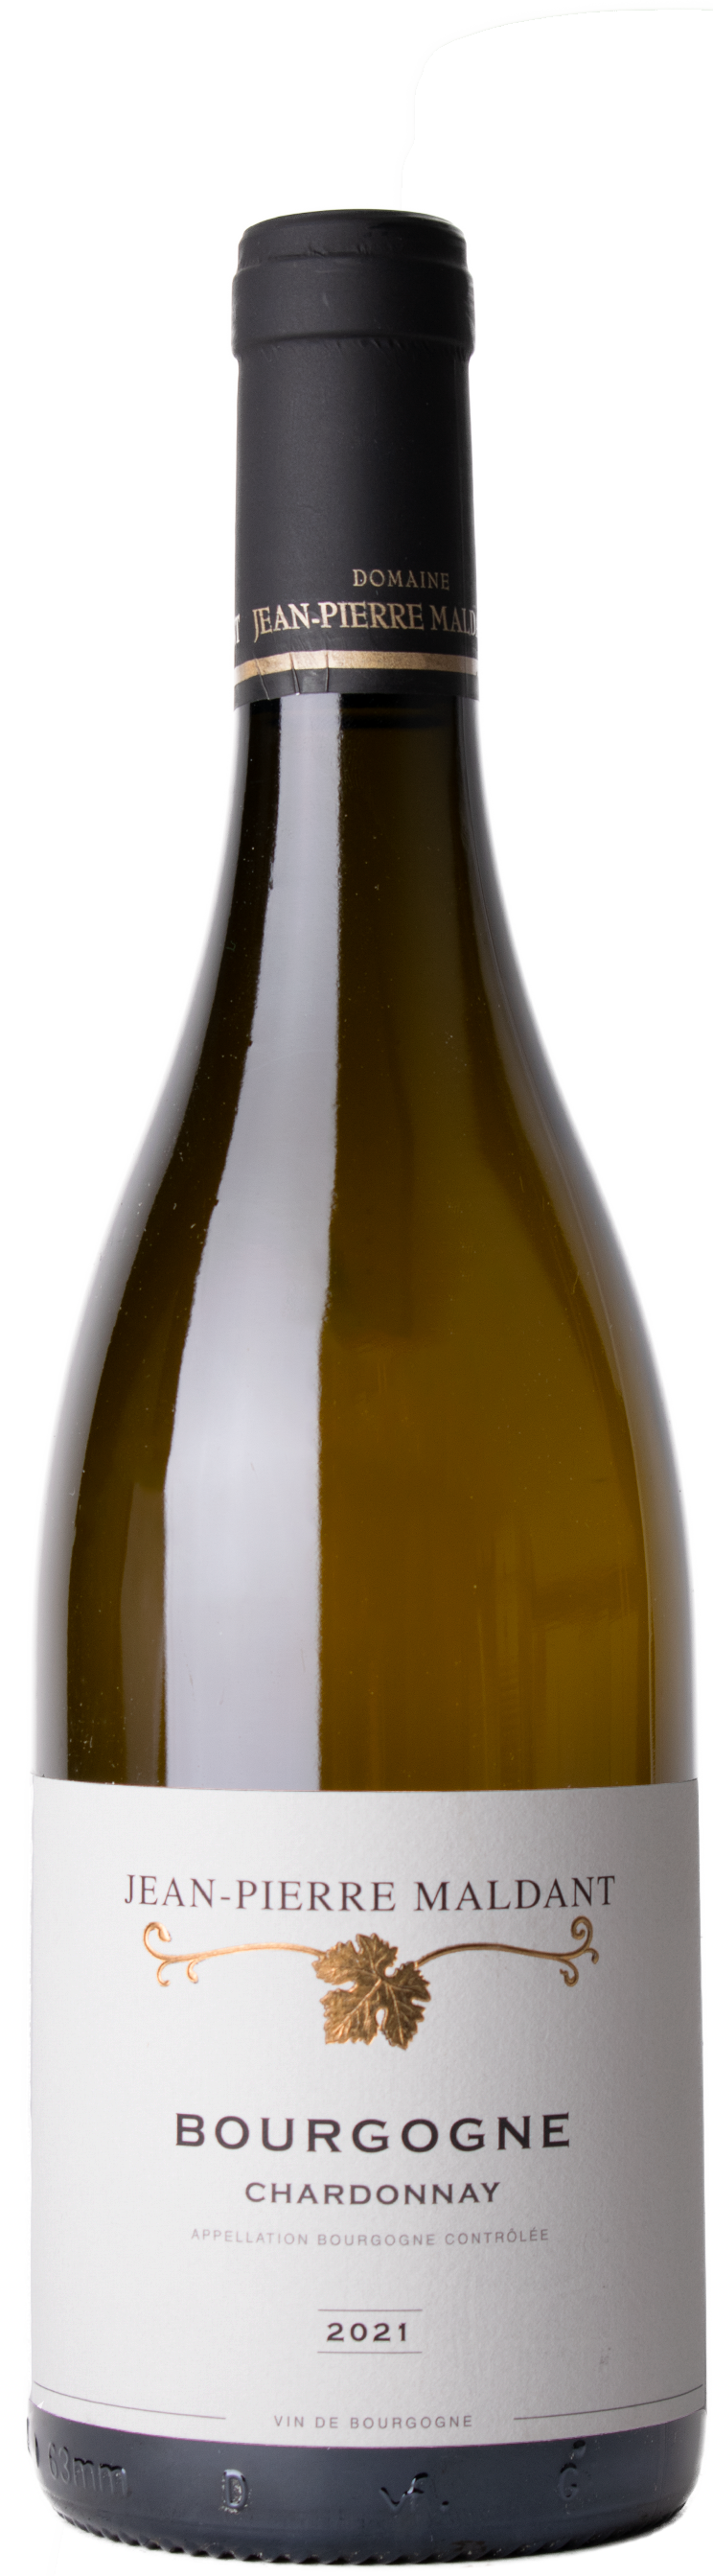 Bourgogne Côte D'or Chardonnay 2021